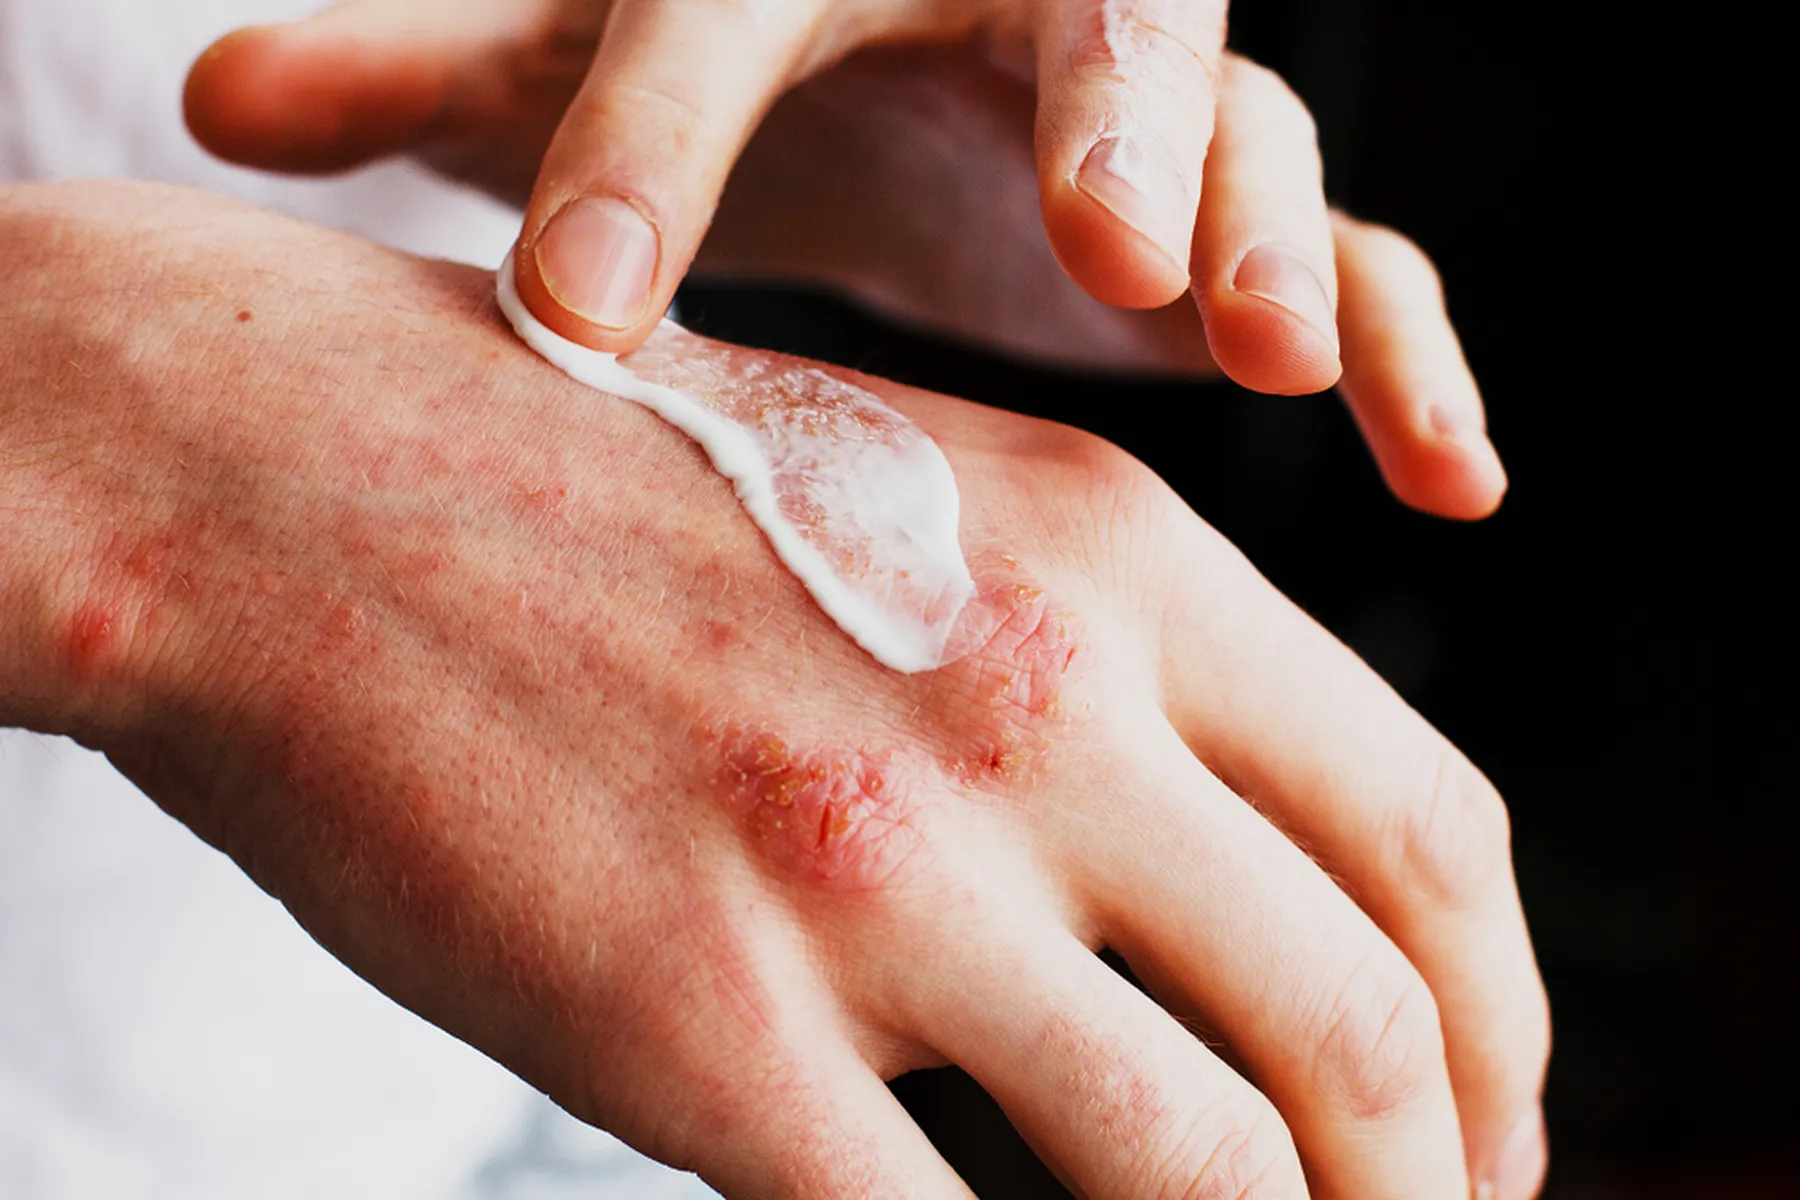 Someone applying cream to hands with eczema.